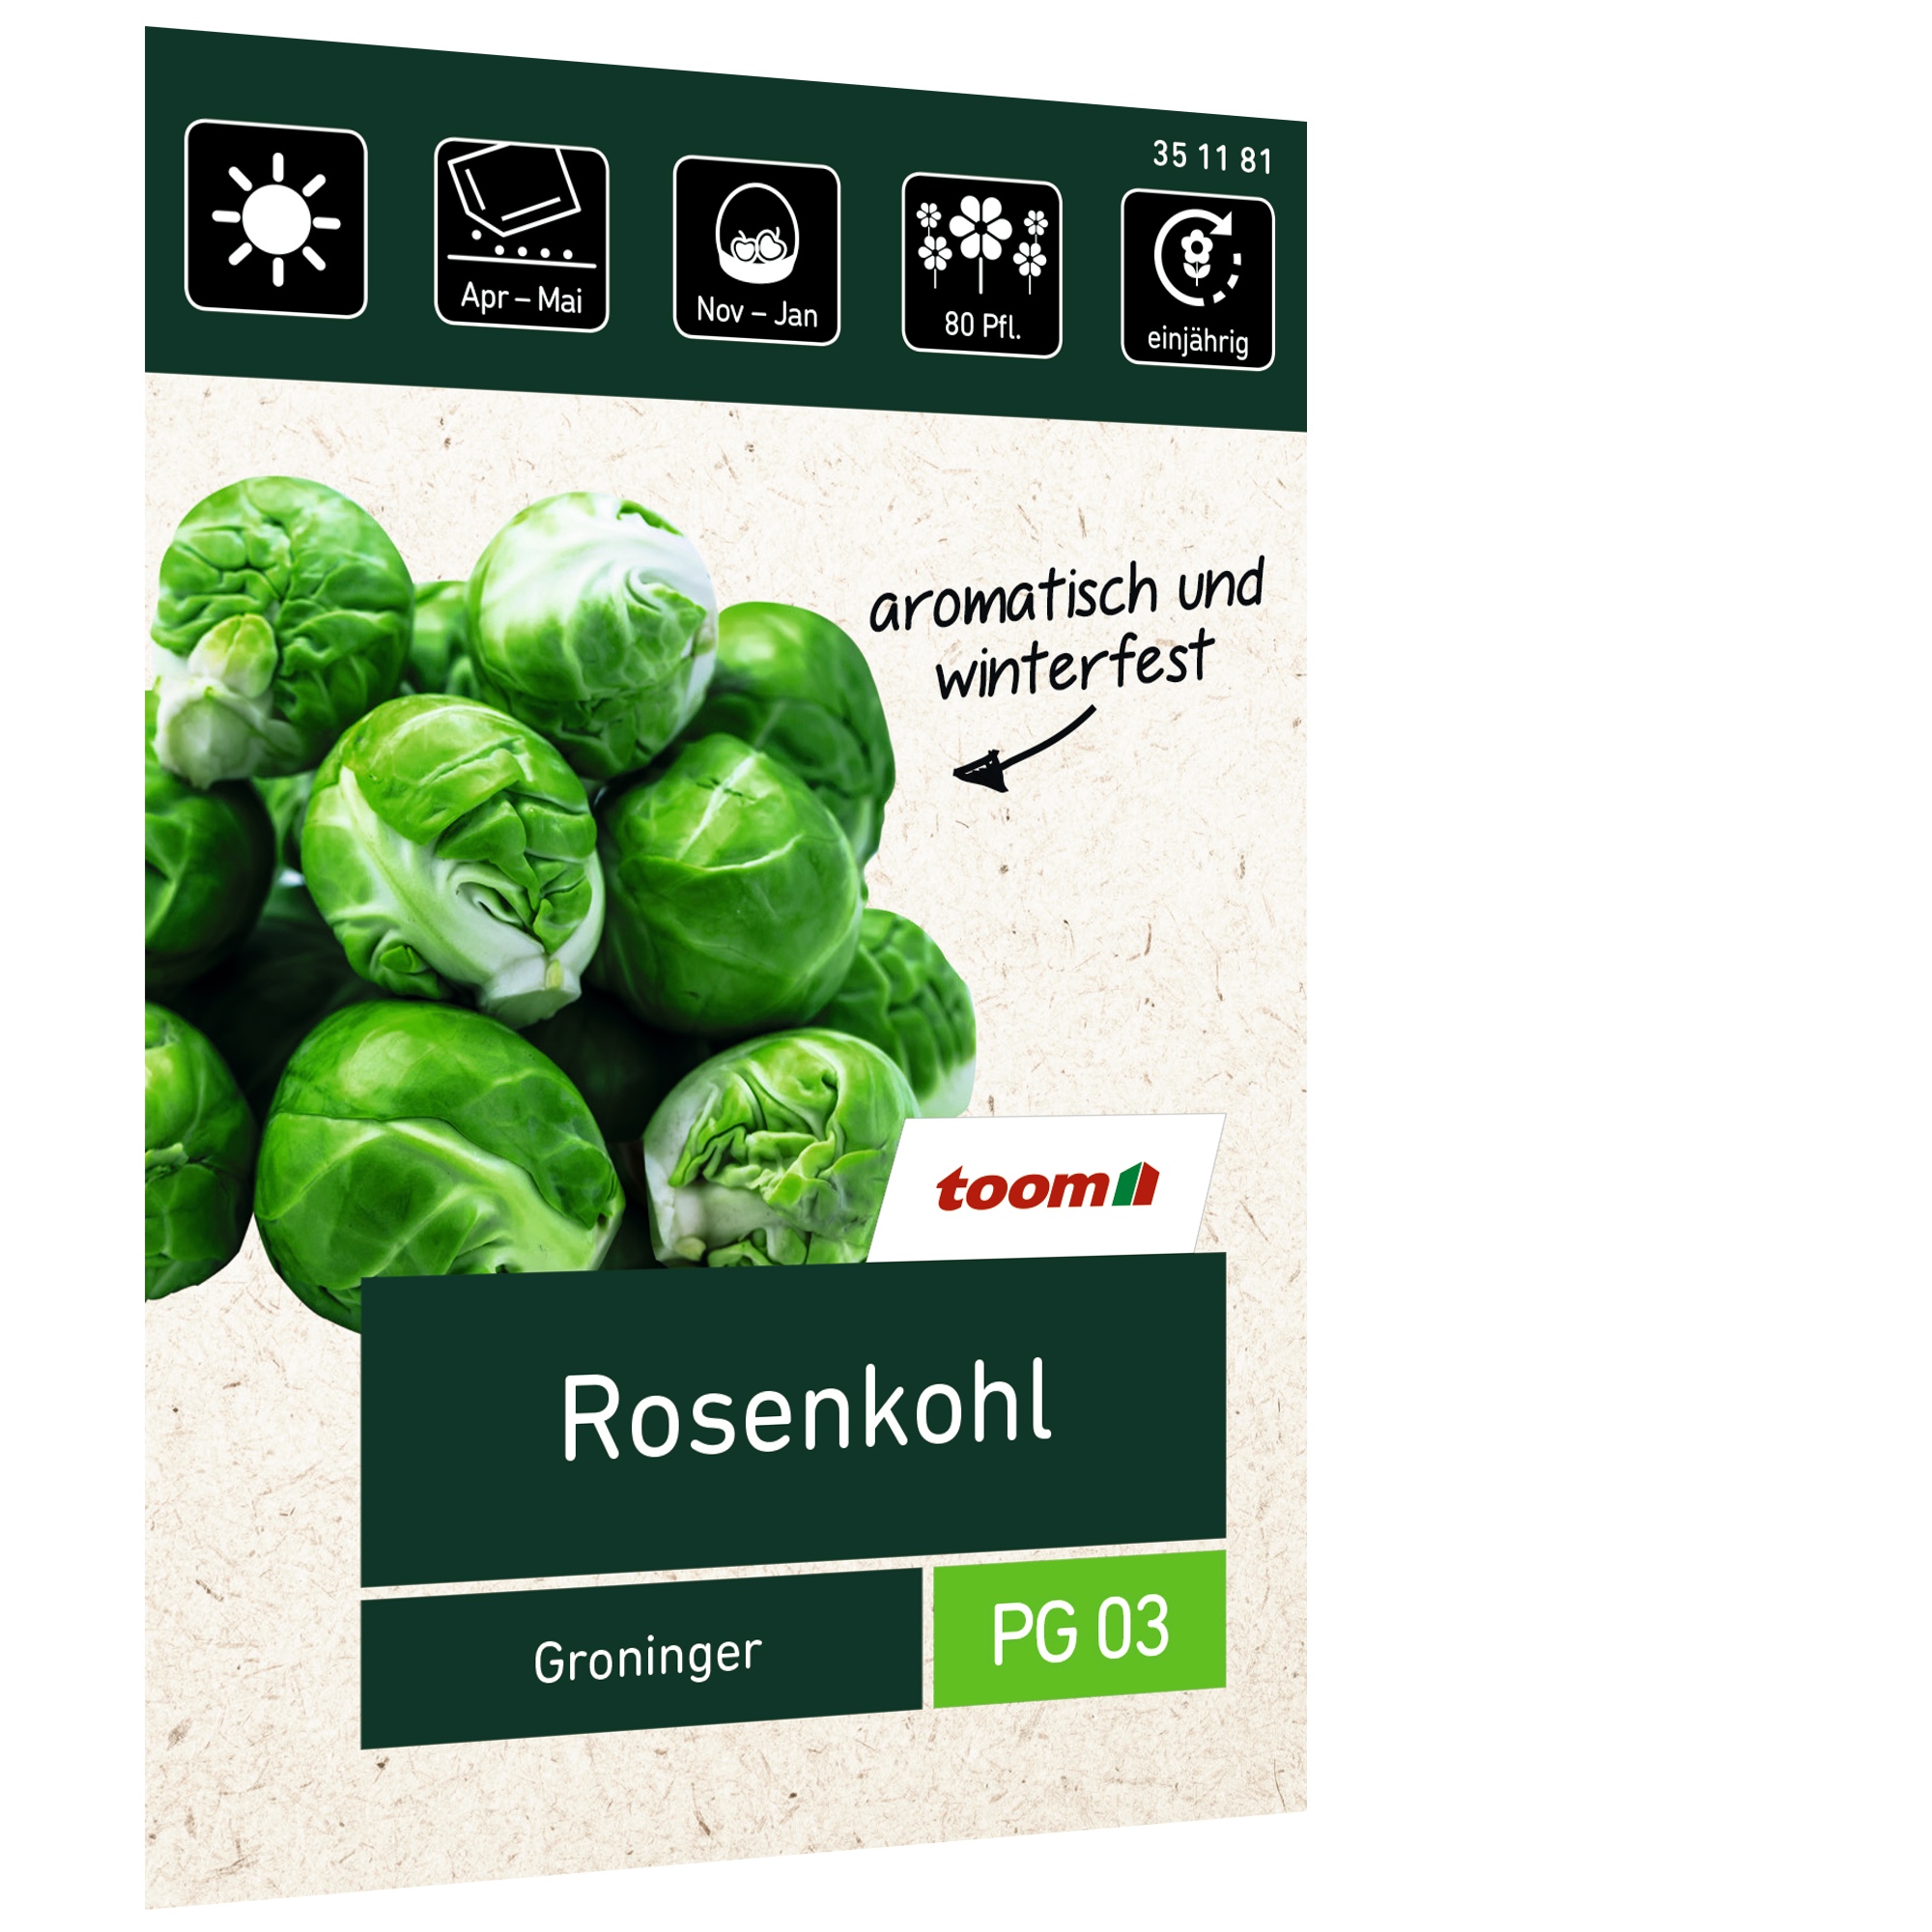 Rosenkohl 'Groninger' + product picture